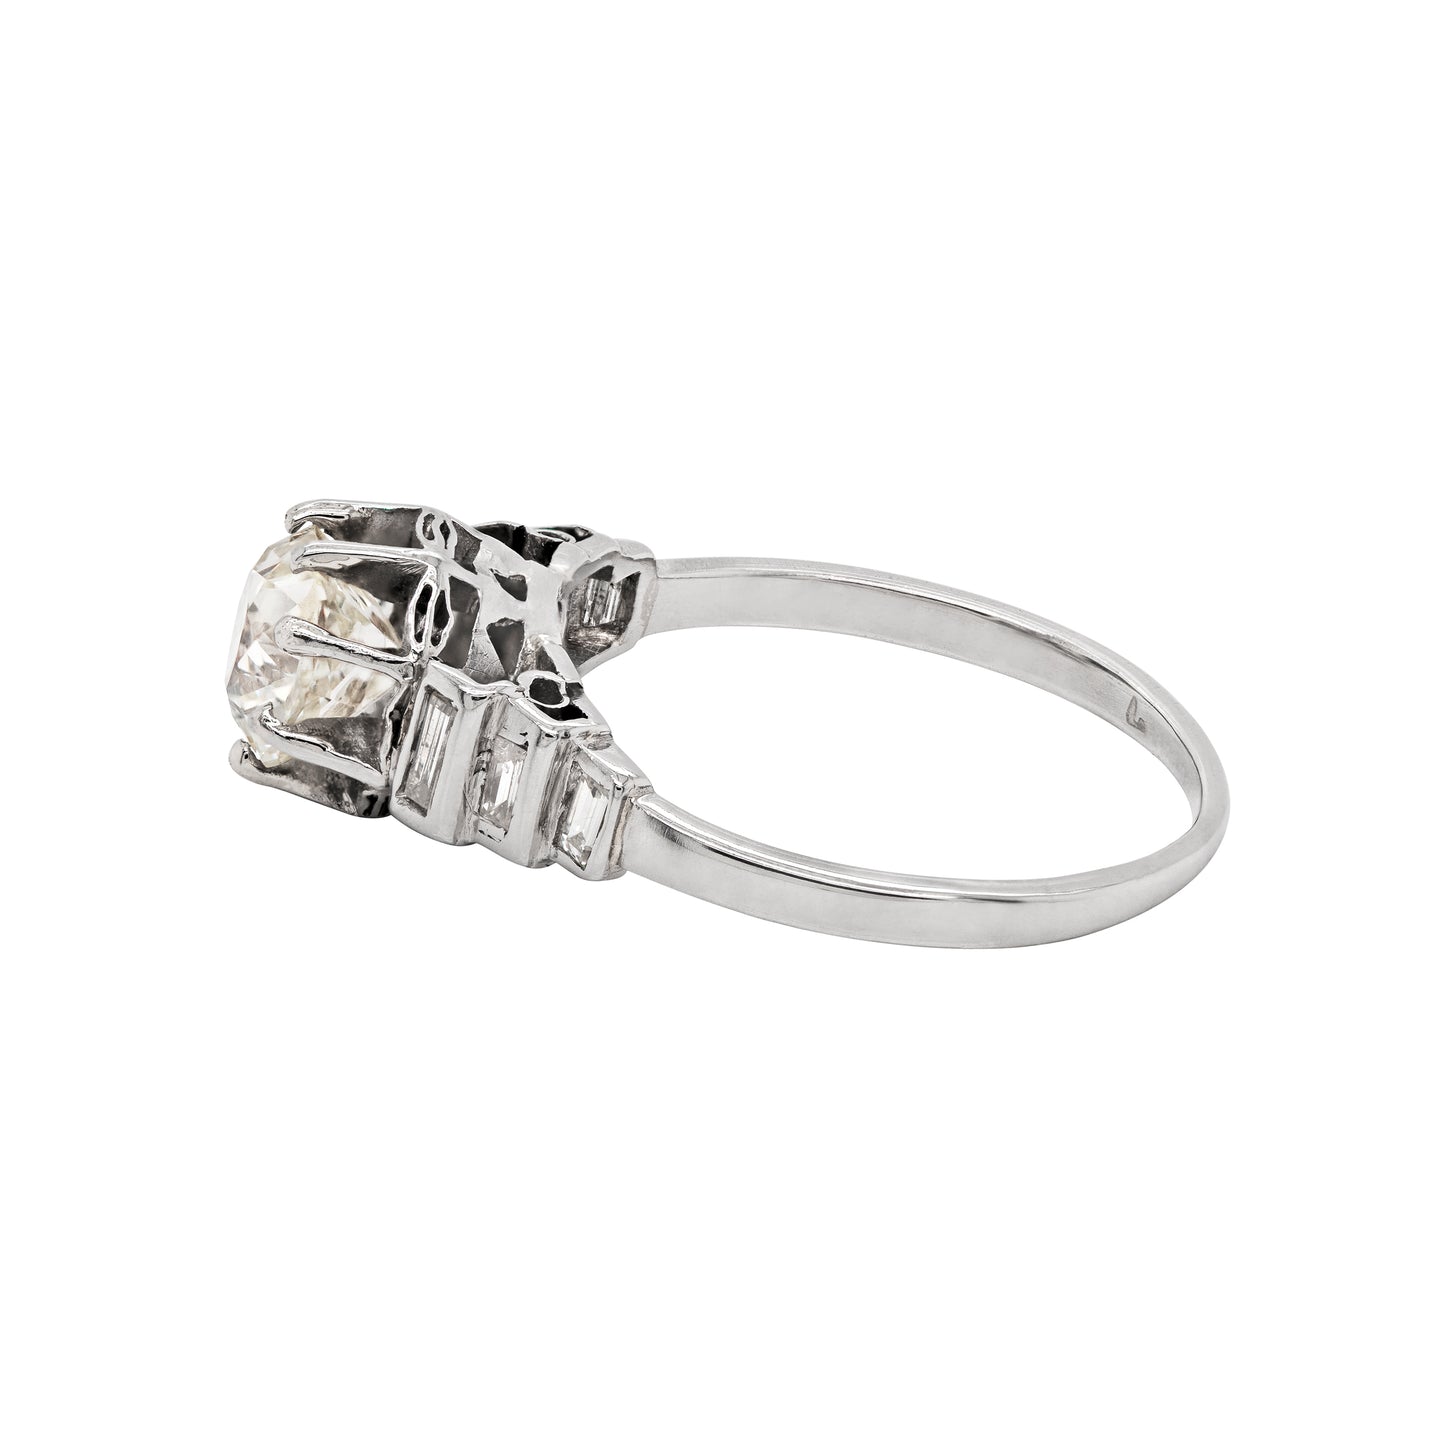 Antique Edwardian 1.15 Carat Old Cut Diamond Engagement Ring, Circa 1910